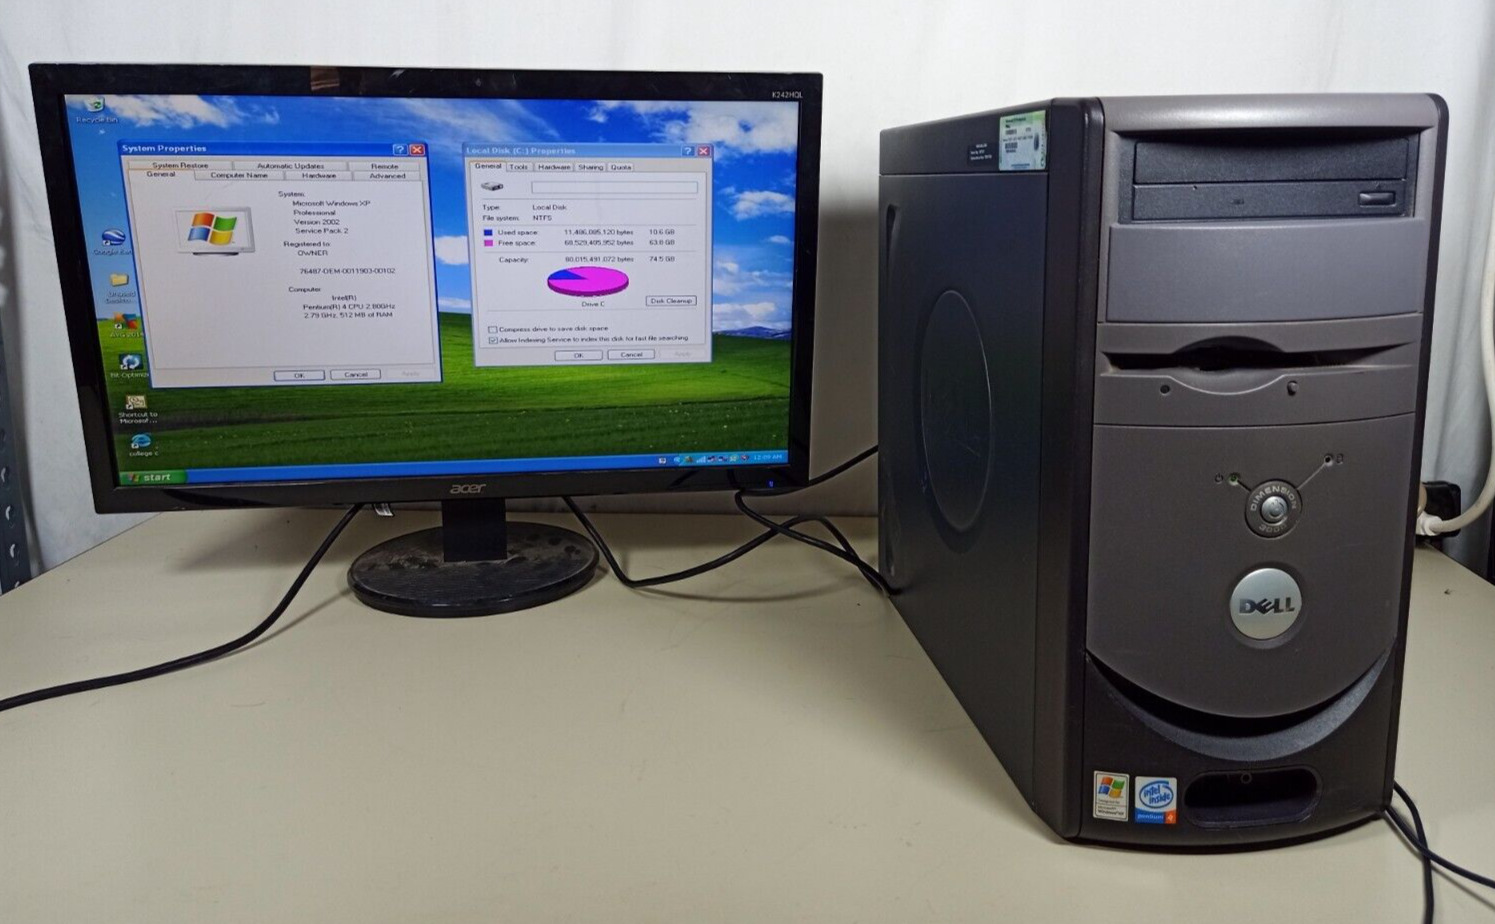 Dell Dimension 3000 Windows XP Computer Pentium 4 2.80GHz 512MB RAM 80GB HDD